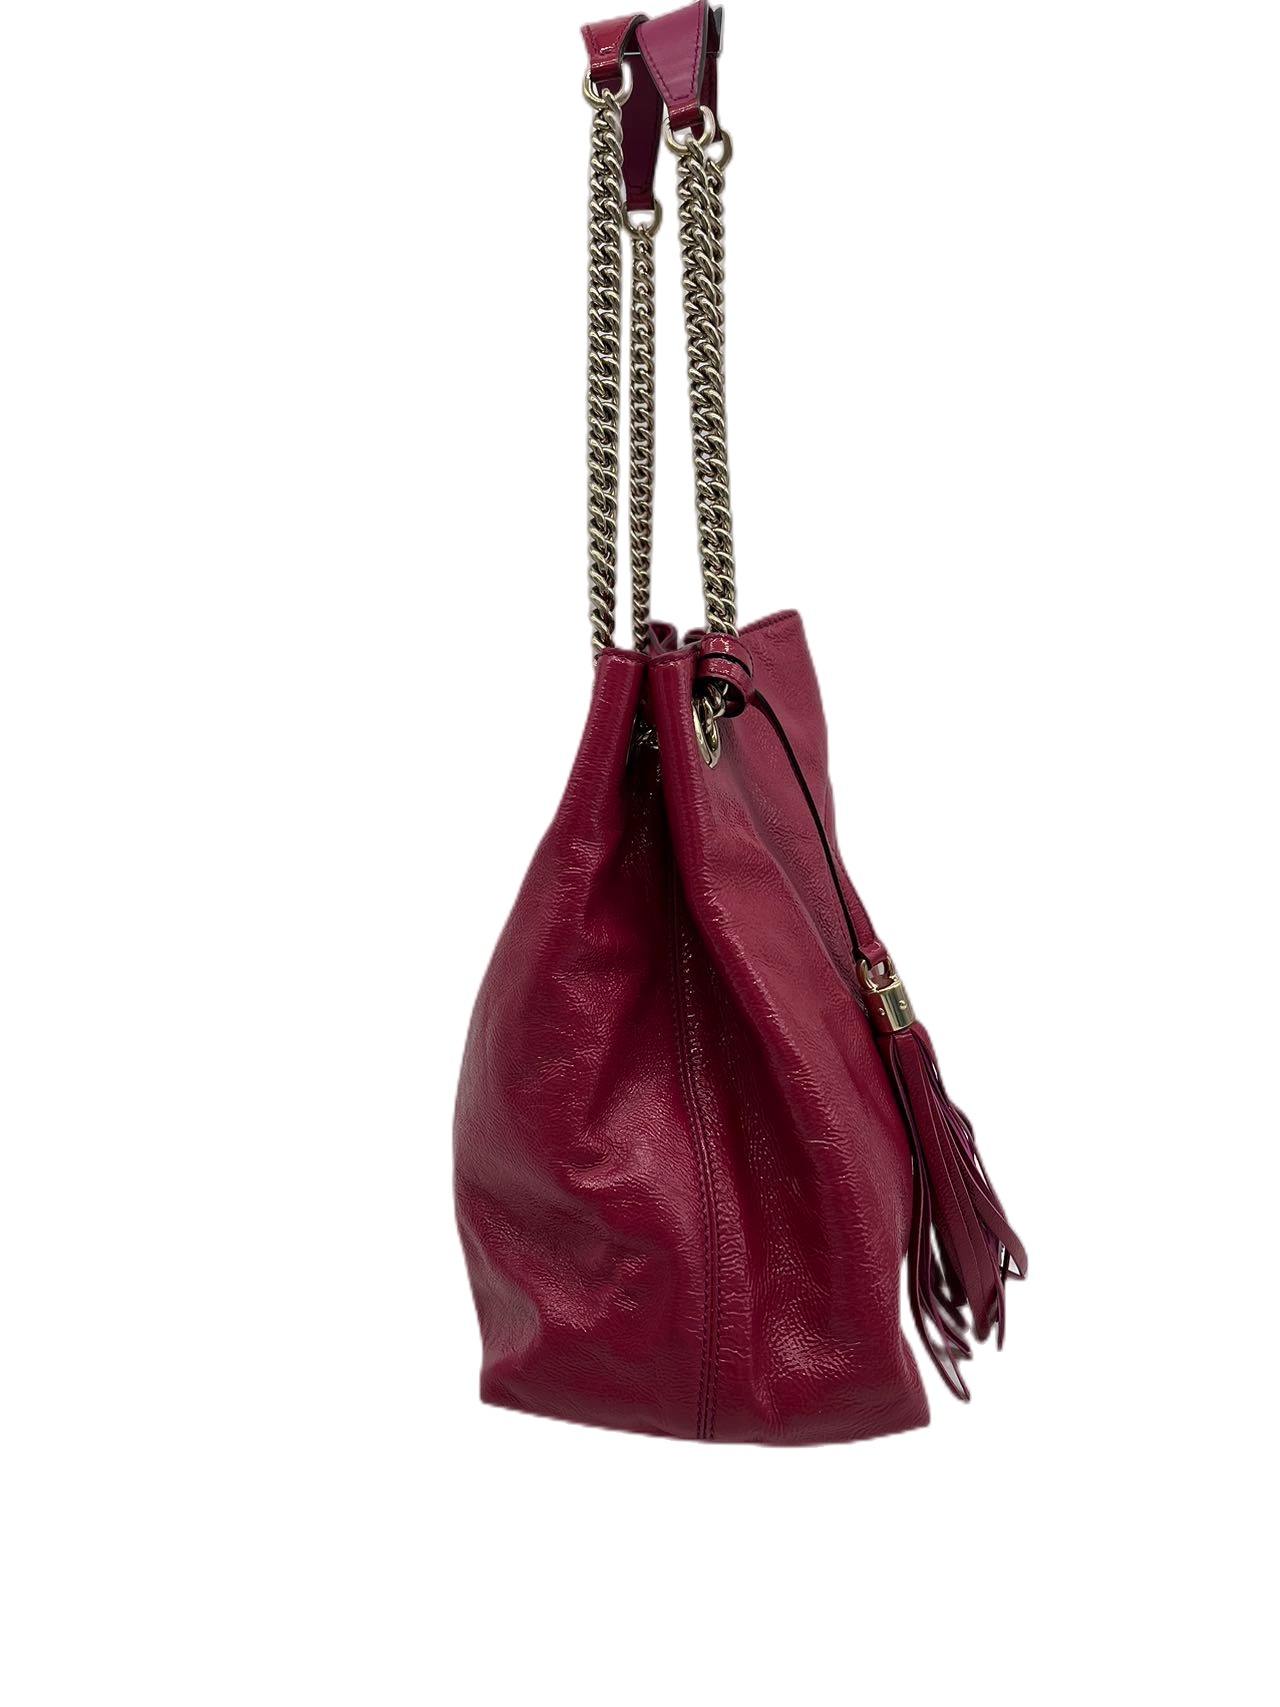 Preloved Gucci GG Logo Patent Leather Soho Chain Shoulder Bag